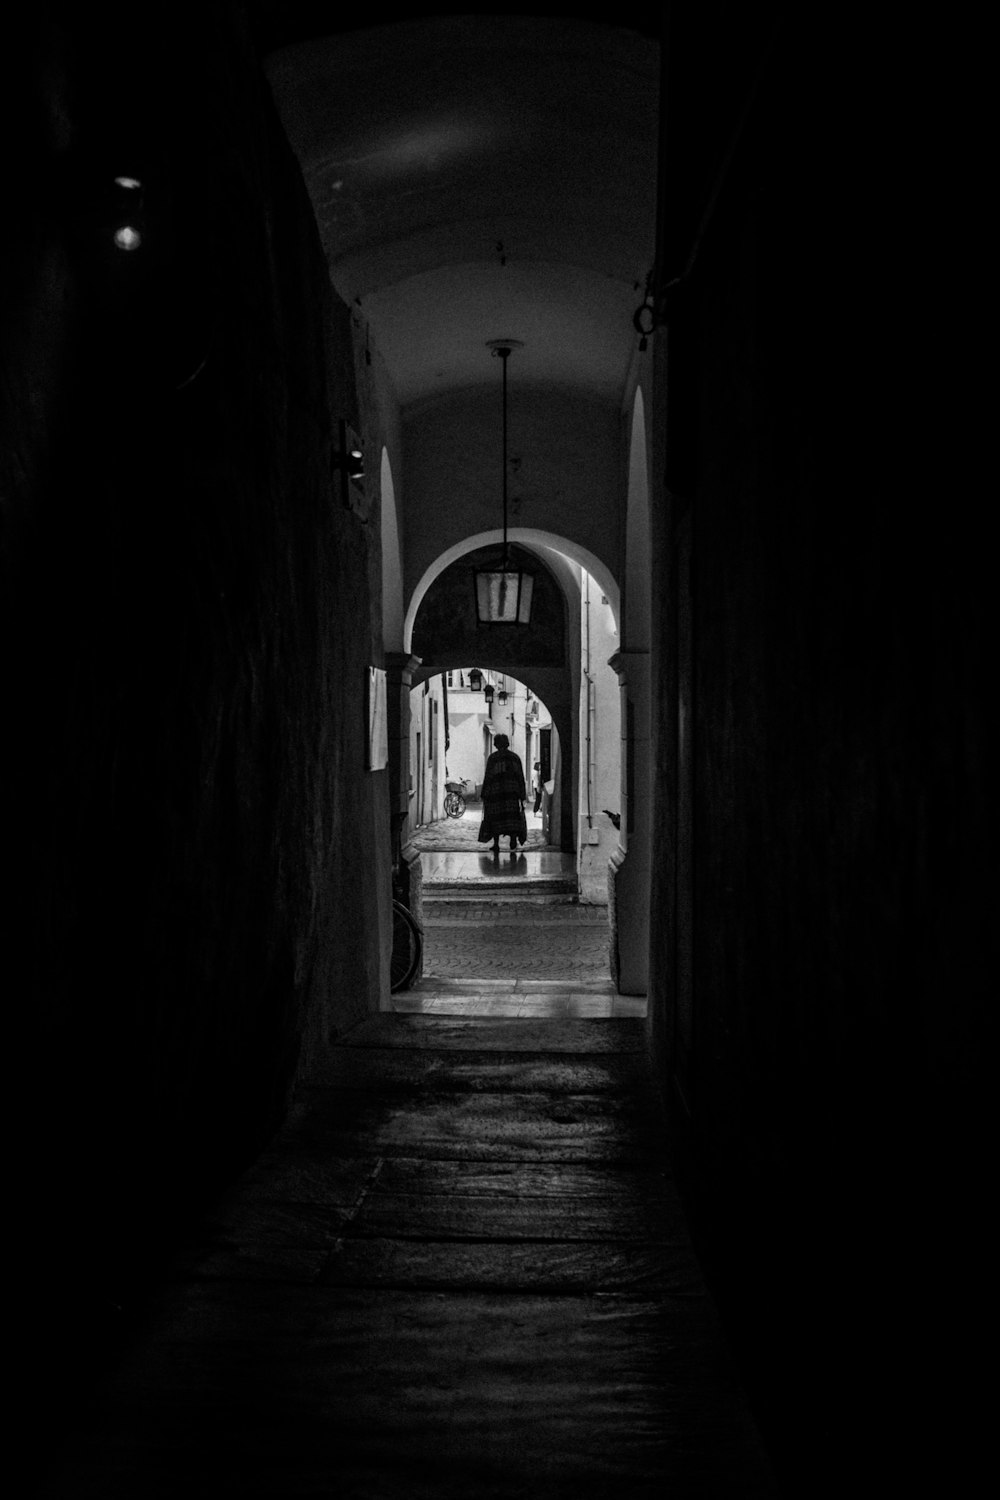 a dark hallway with a person walking down it